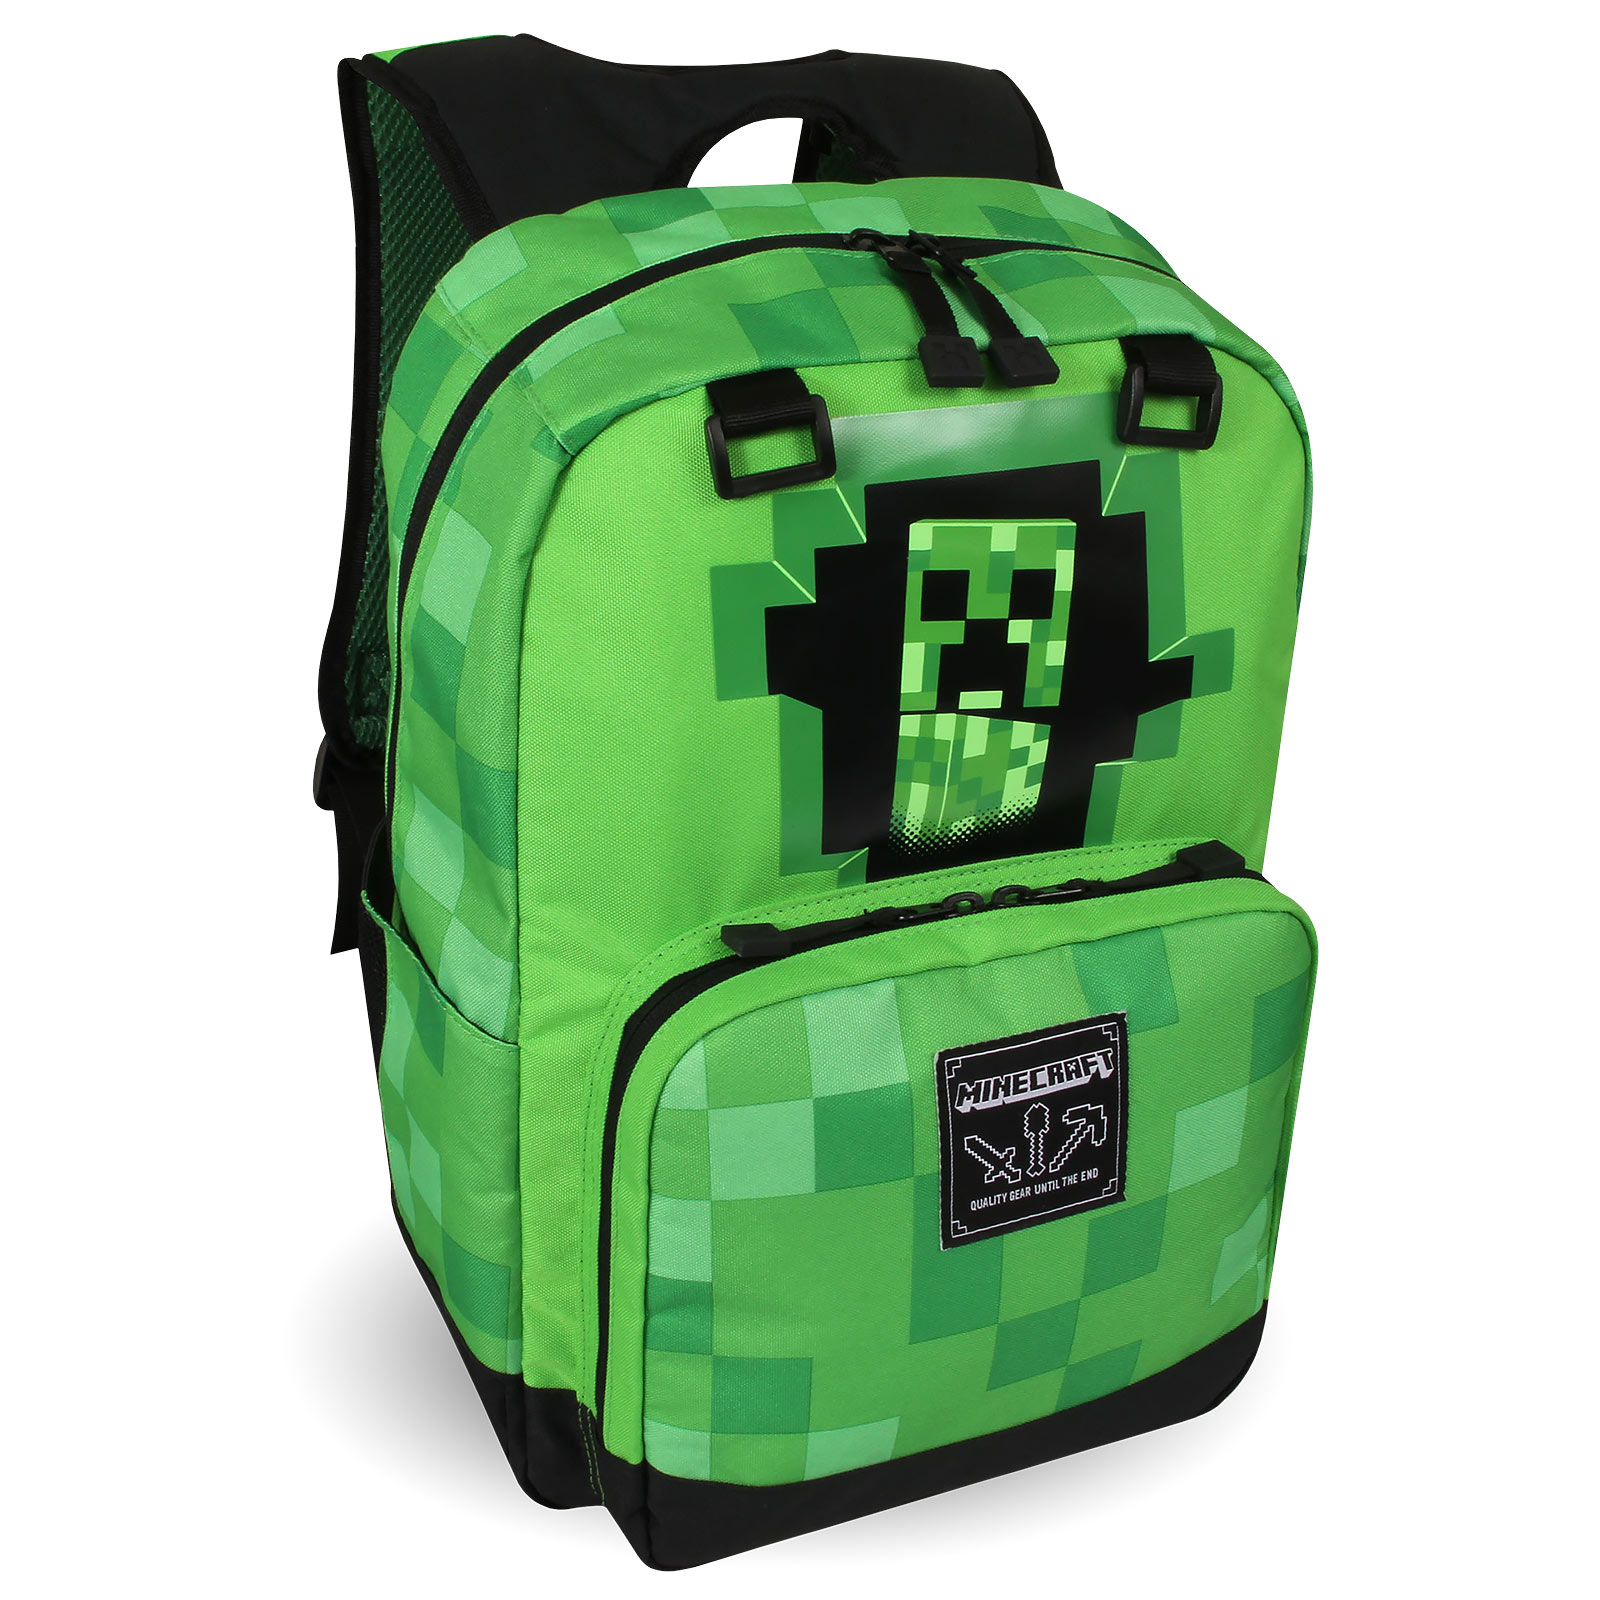 Minecraft - Creeper Inside backpack green